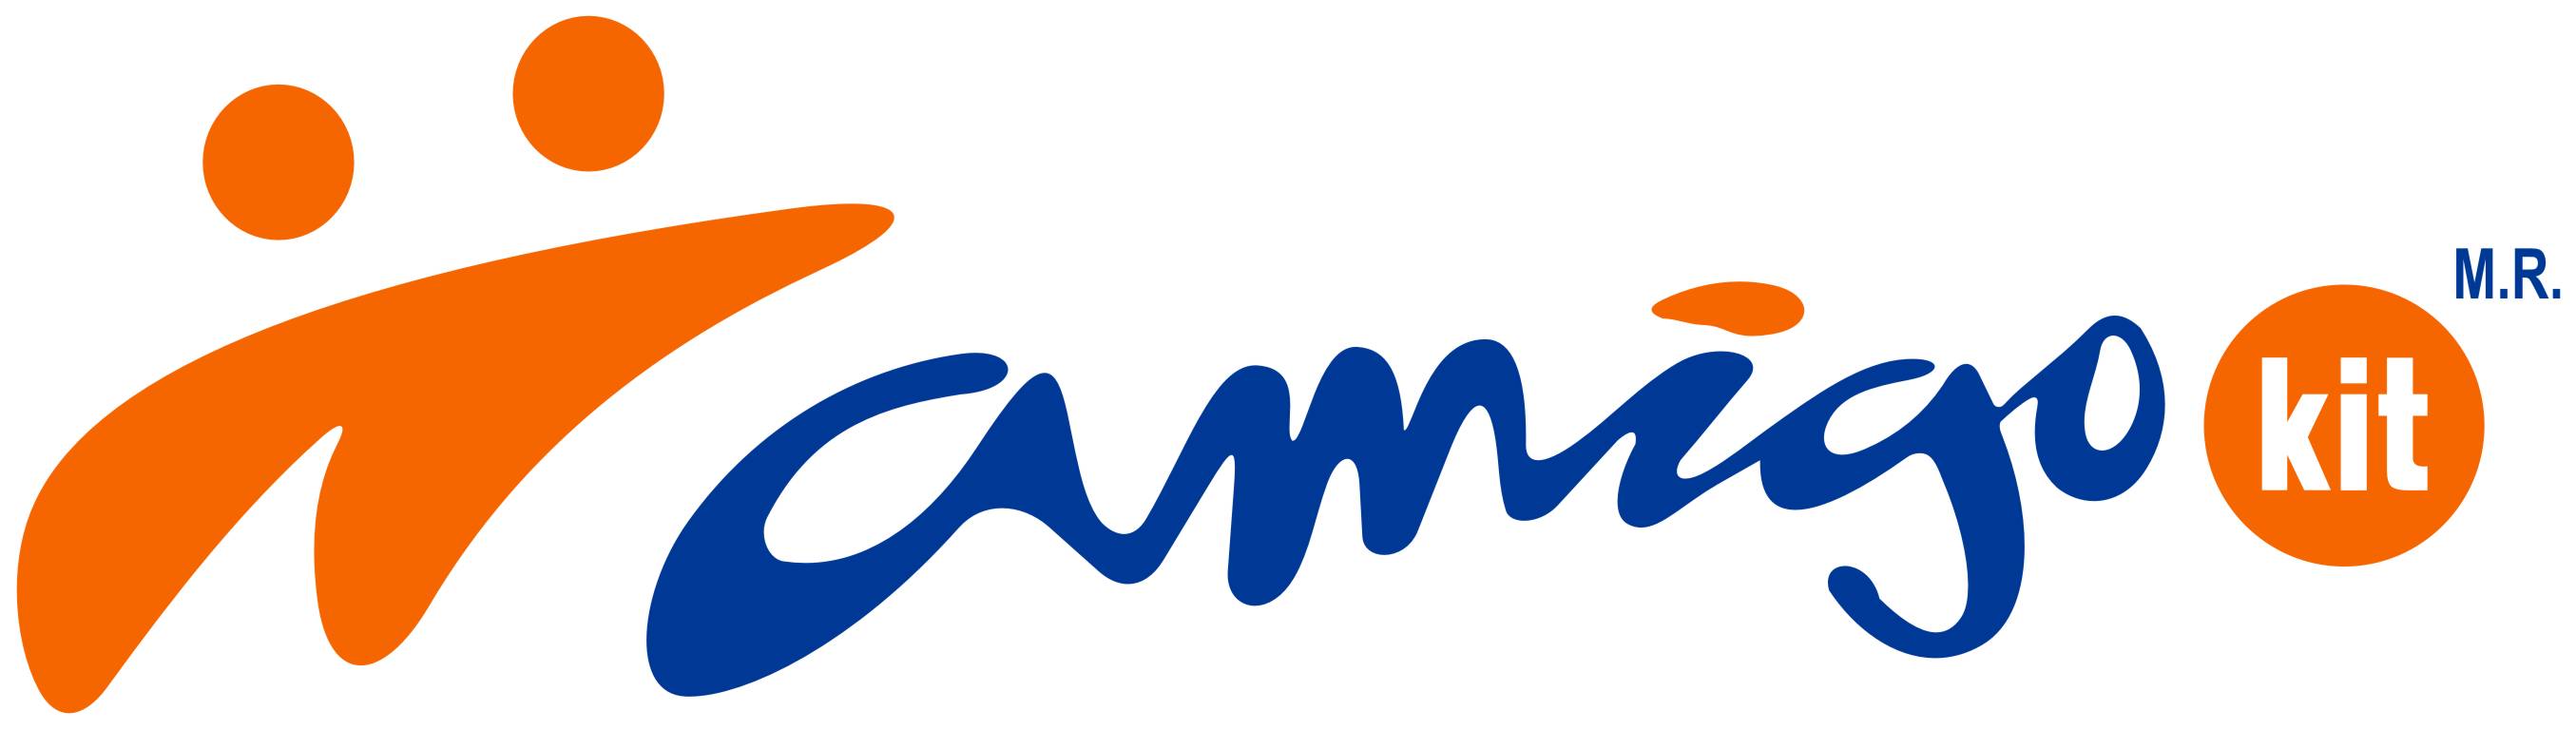 COMCEL 3GSM Logo Vector